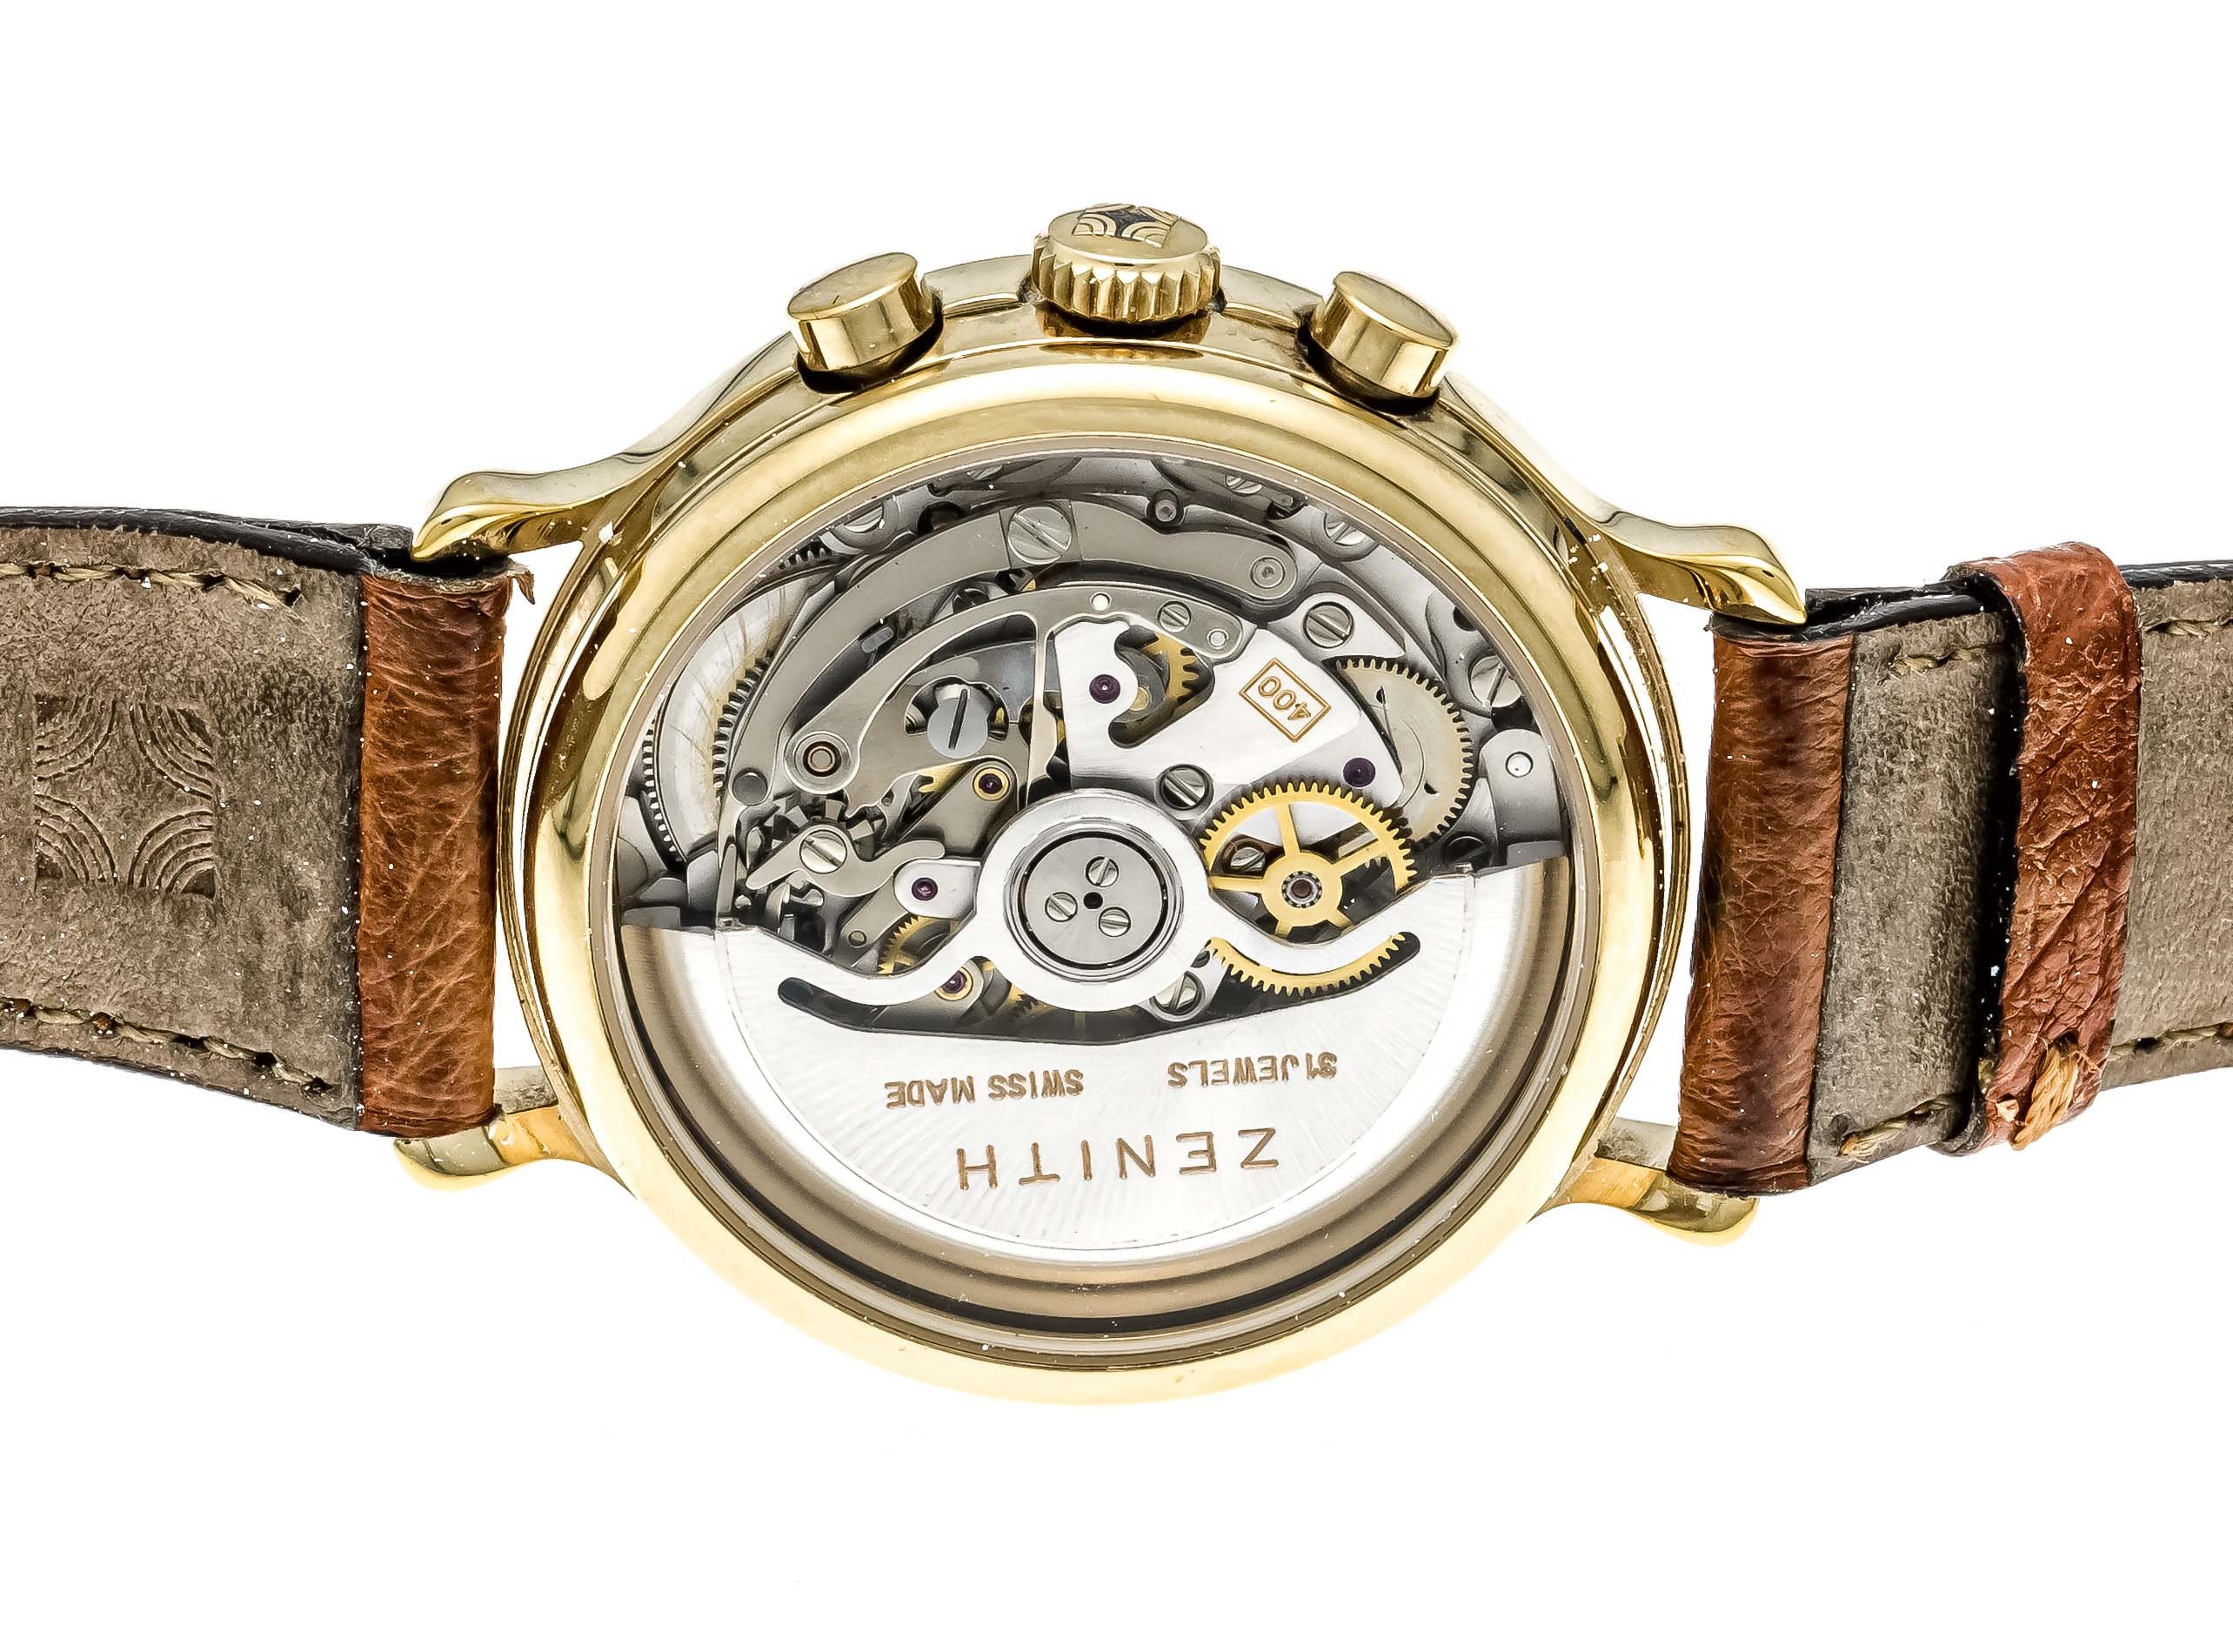 Zenith men's wristwatch, 20ym gold-plated, chronograph automatic, El-Primero movement, Ref. 20.0140. - Image 2 of 3